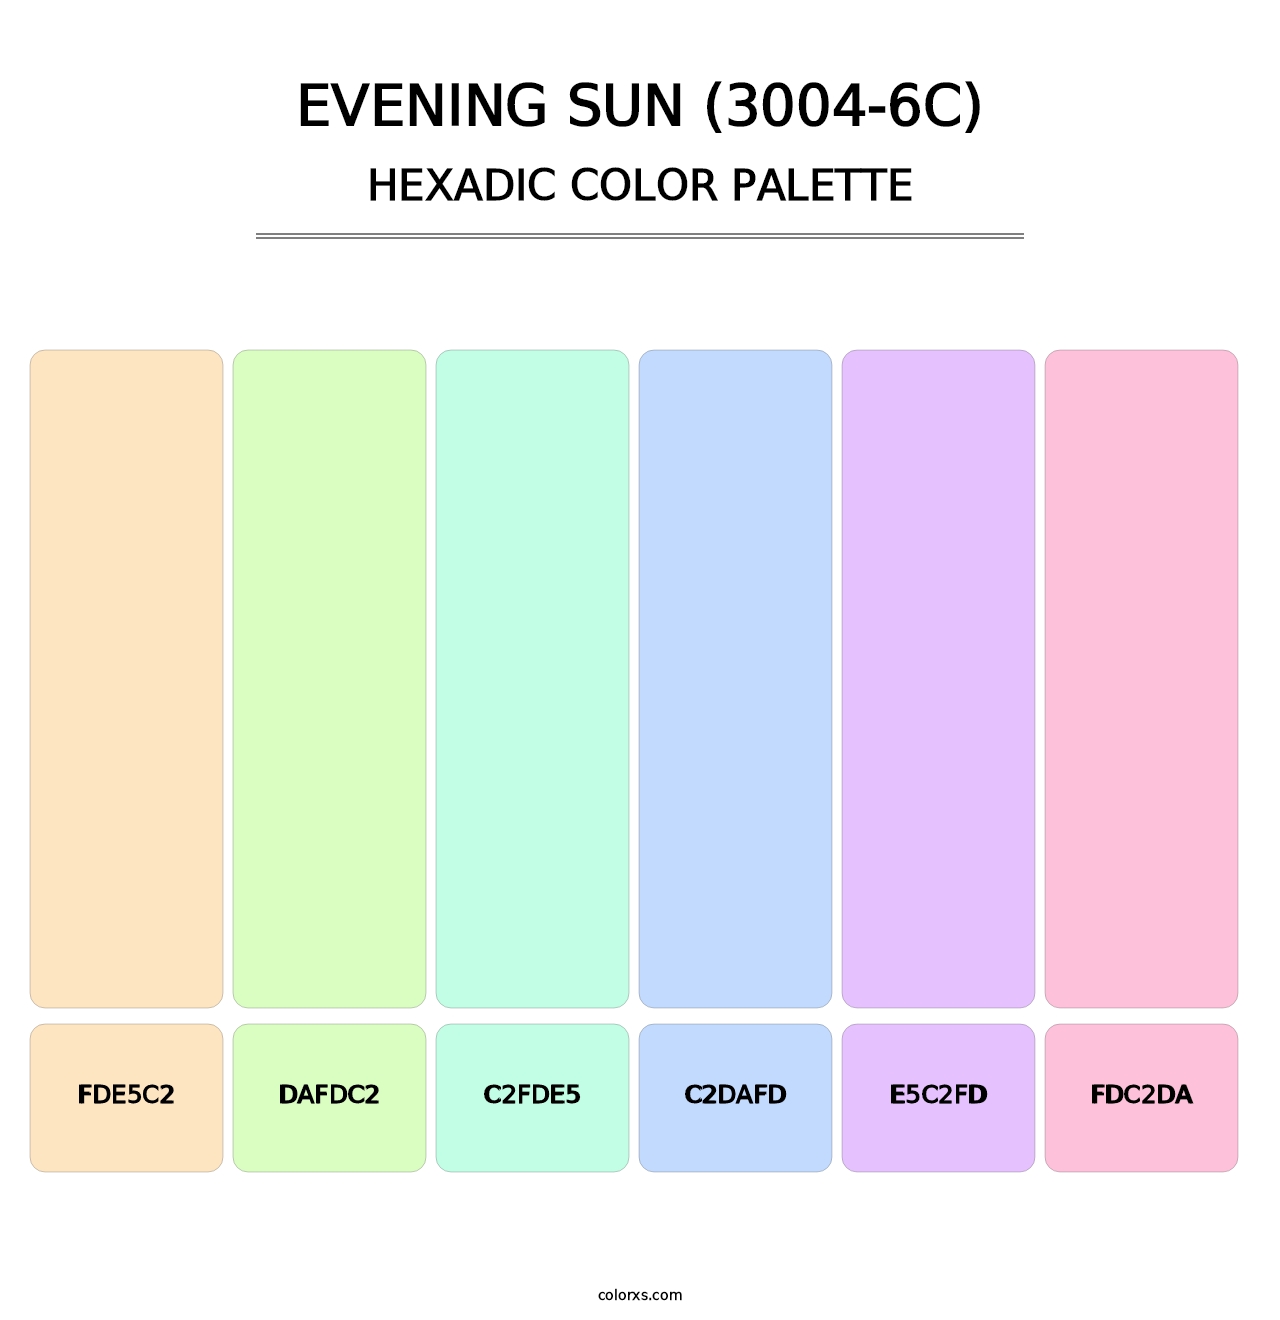 Evening Sun (3004-6C) - Hexadic Color Palette